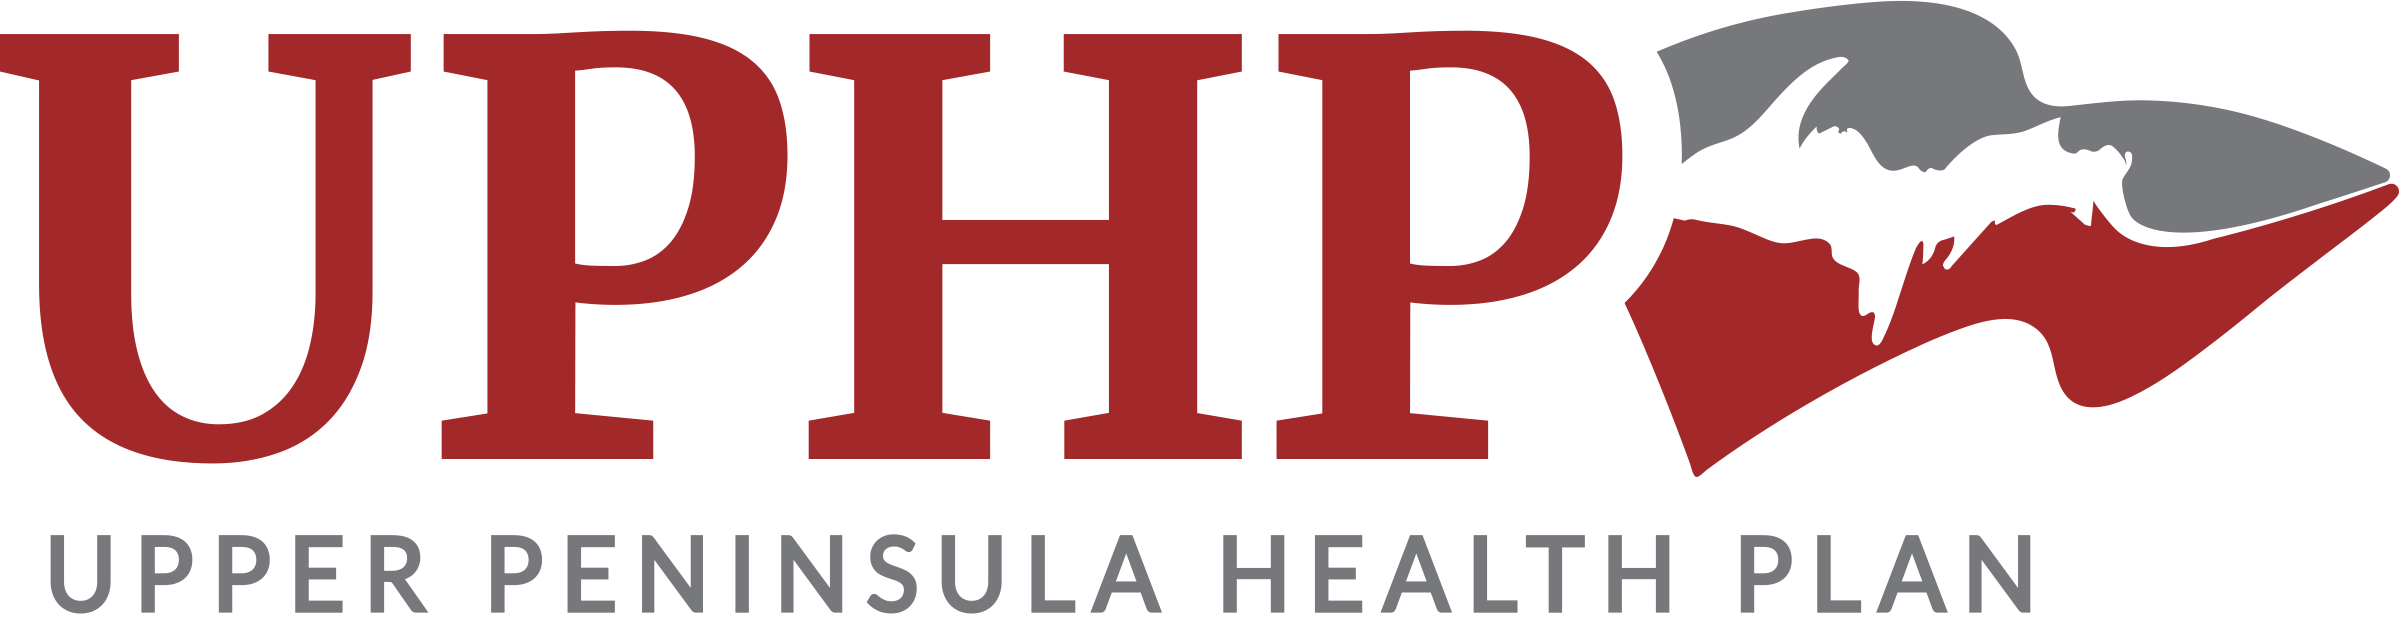 Upper Peninsula Health Plan logo